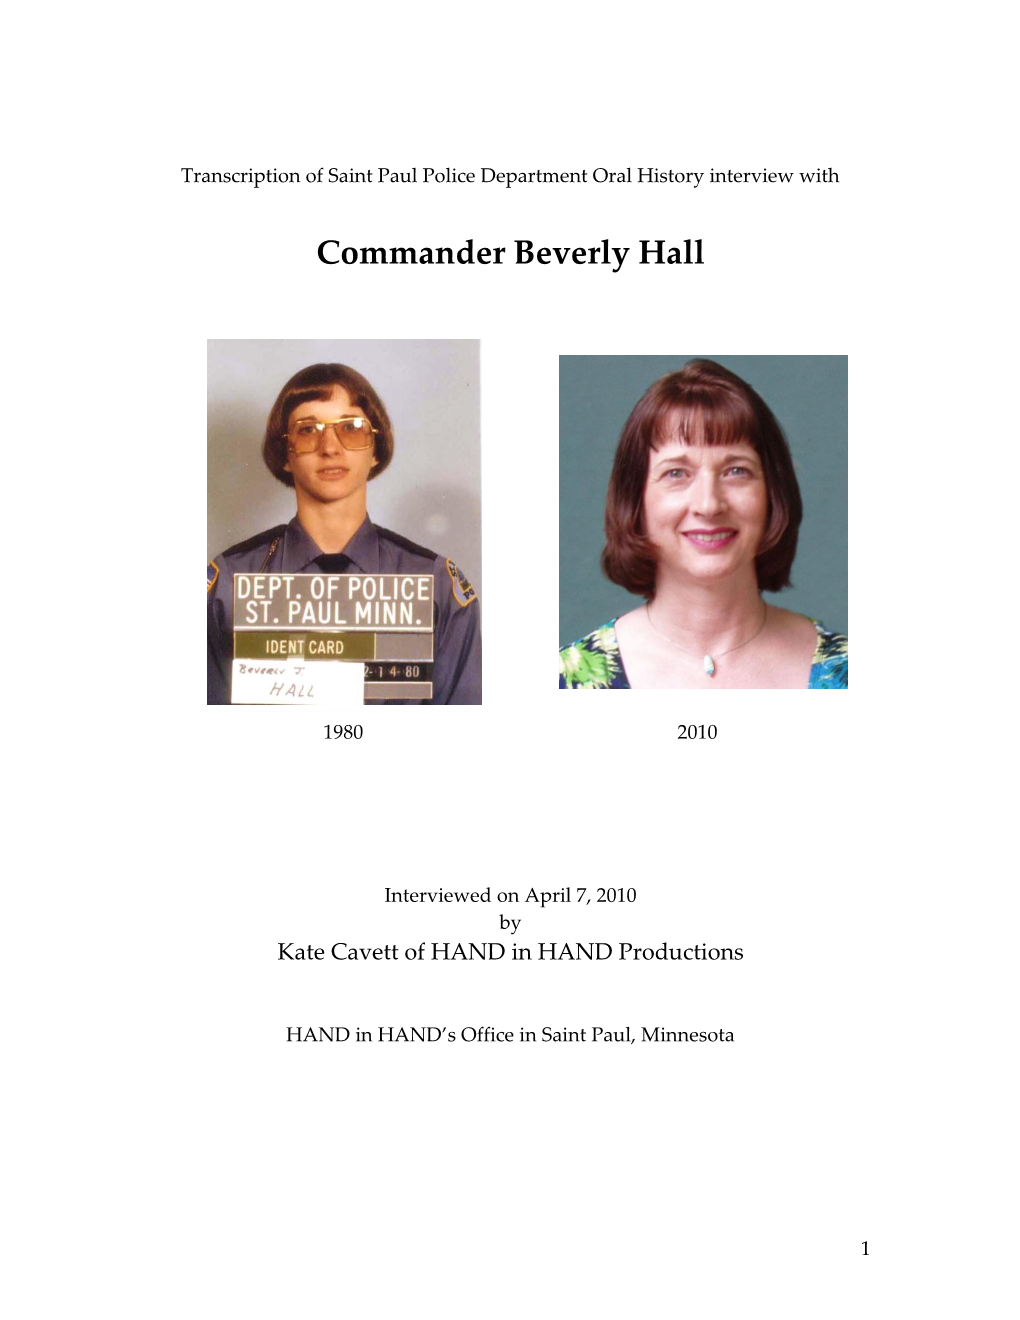 Commander Beverly Hall